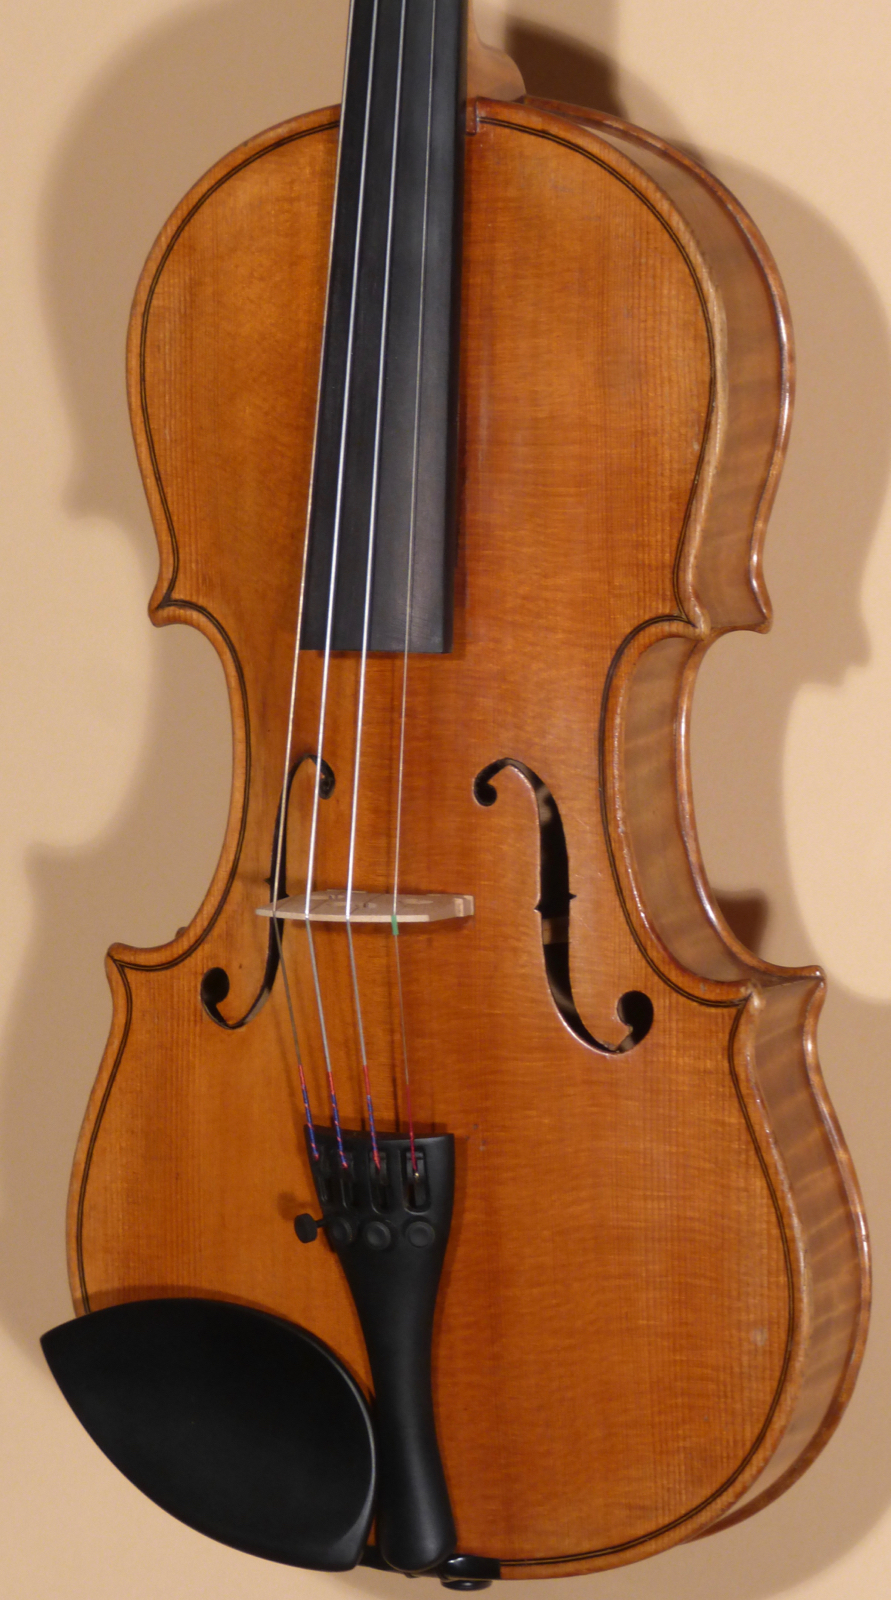 Circa. 1919/20 C.G. CONN Violin Product